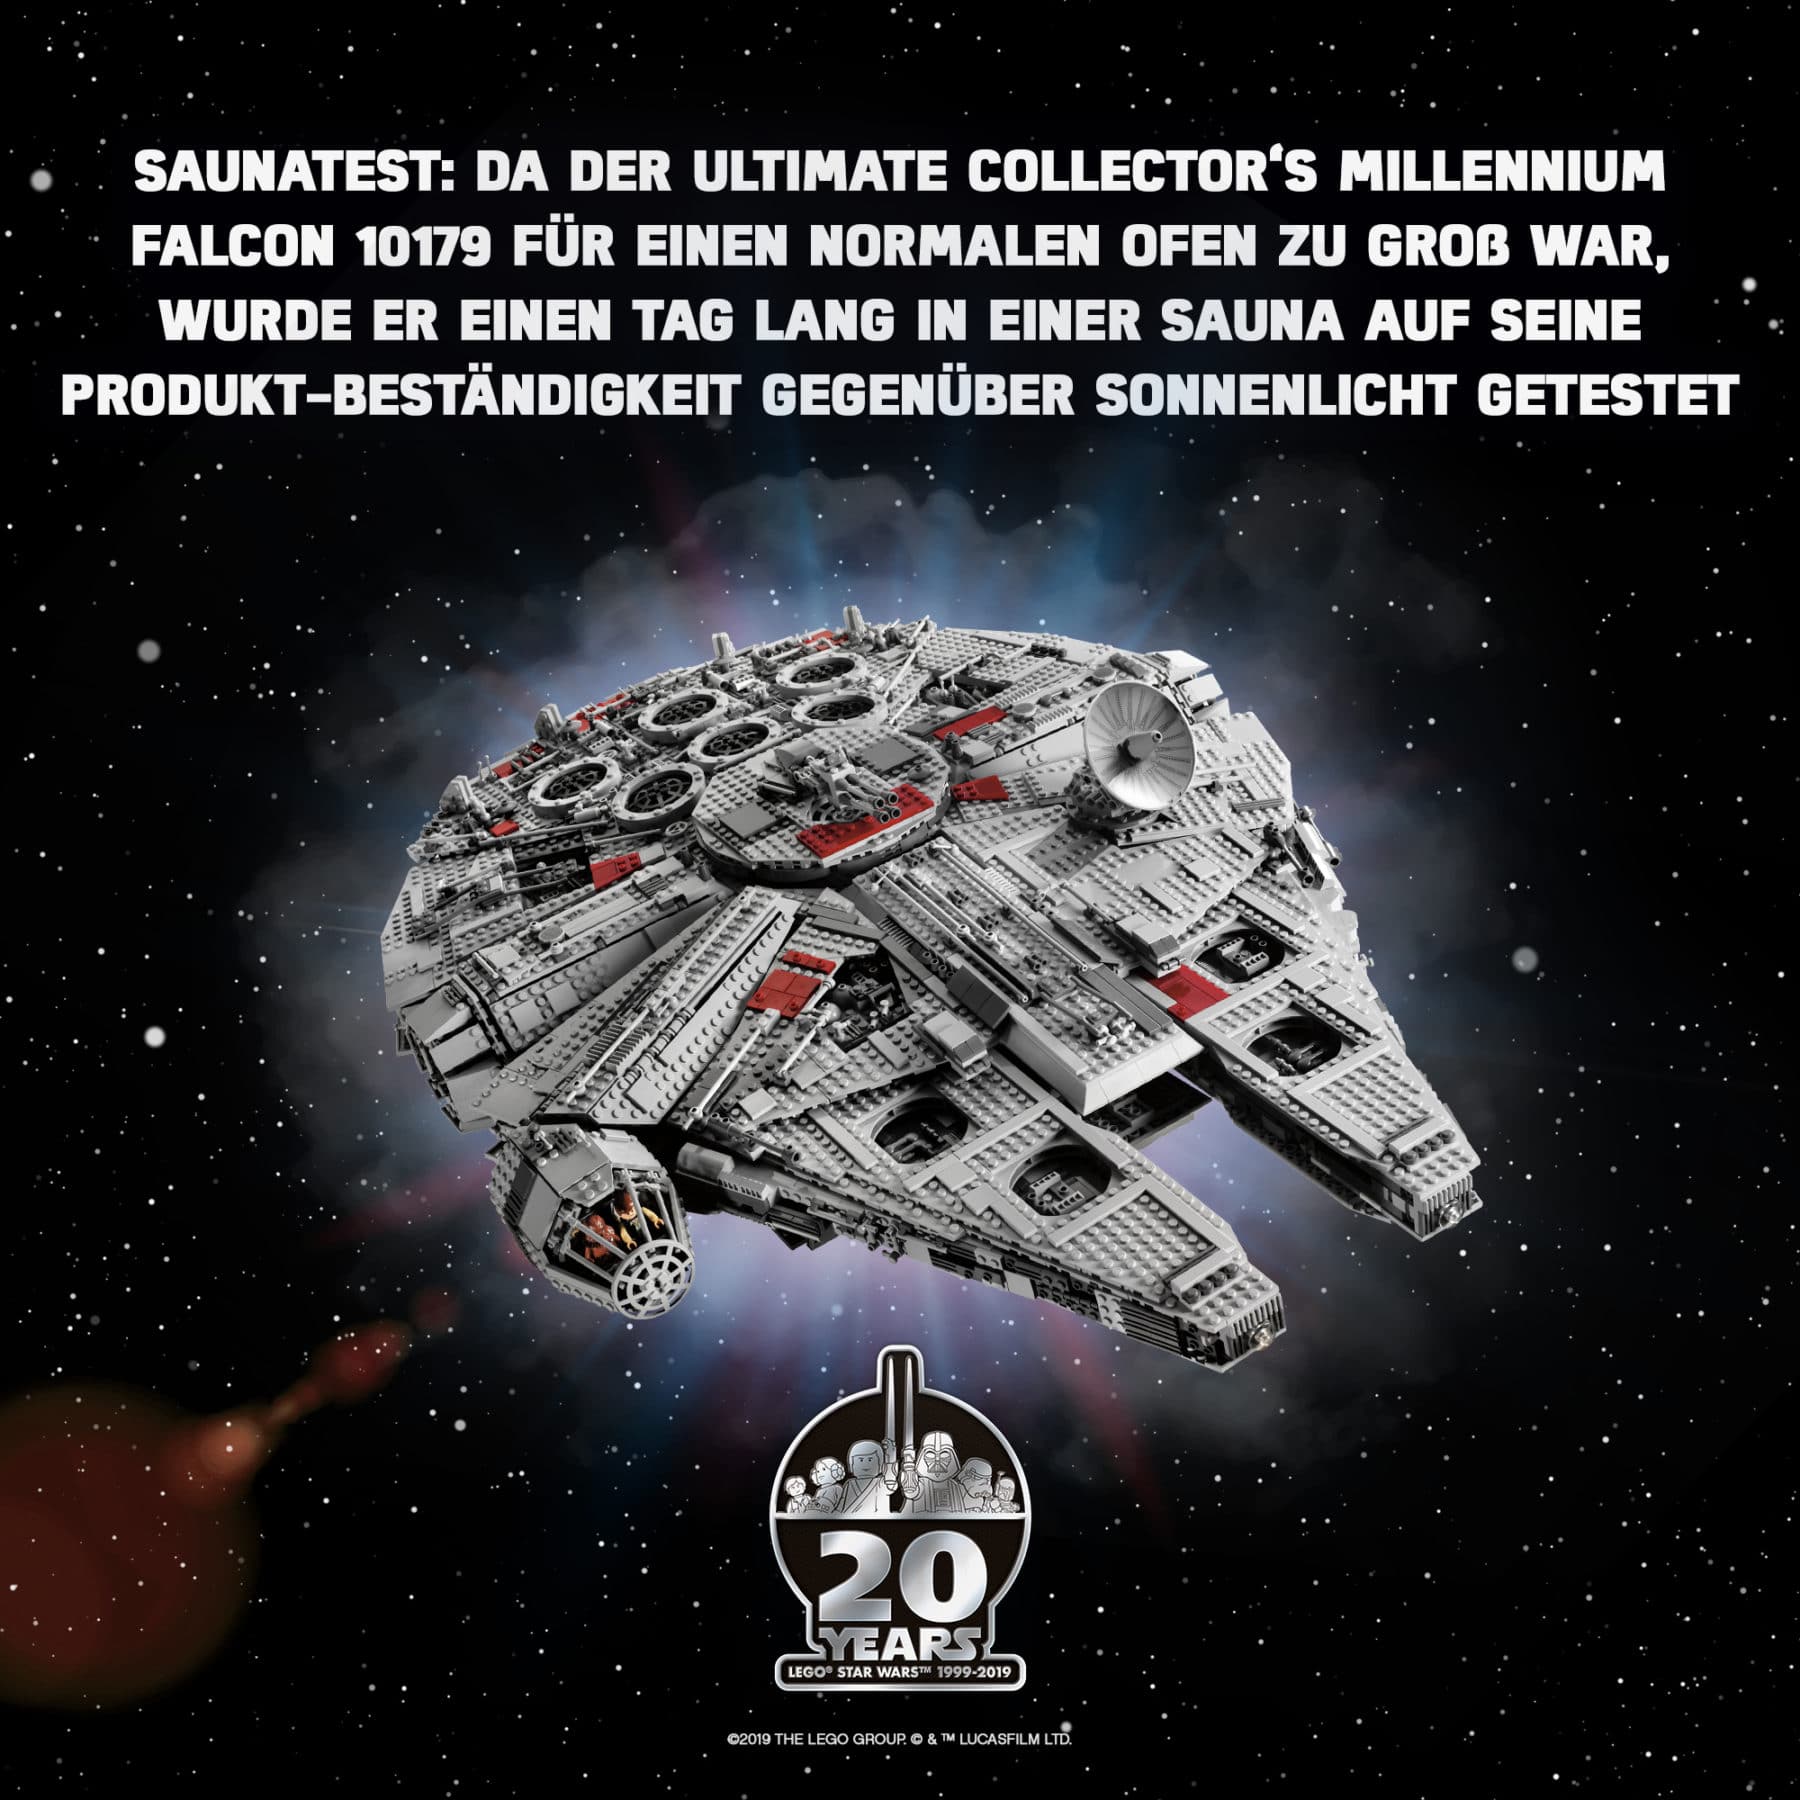 LEGO Star Wars 20th Anniversary Fakten